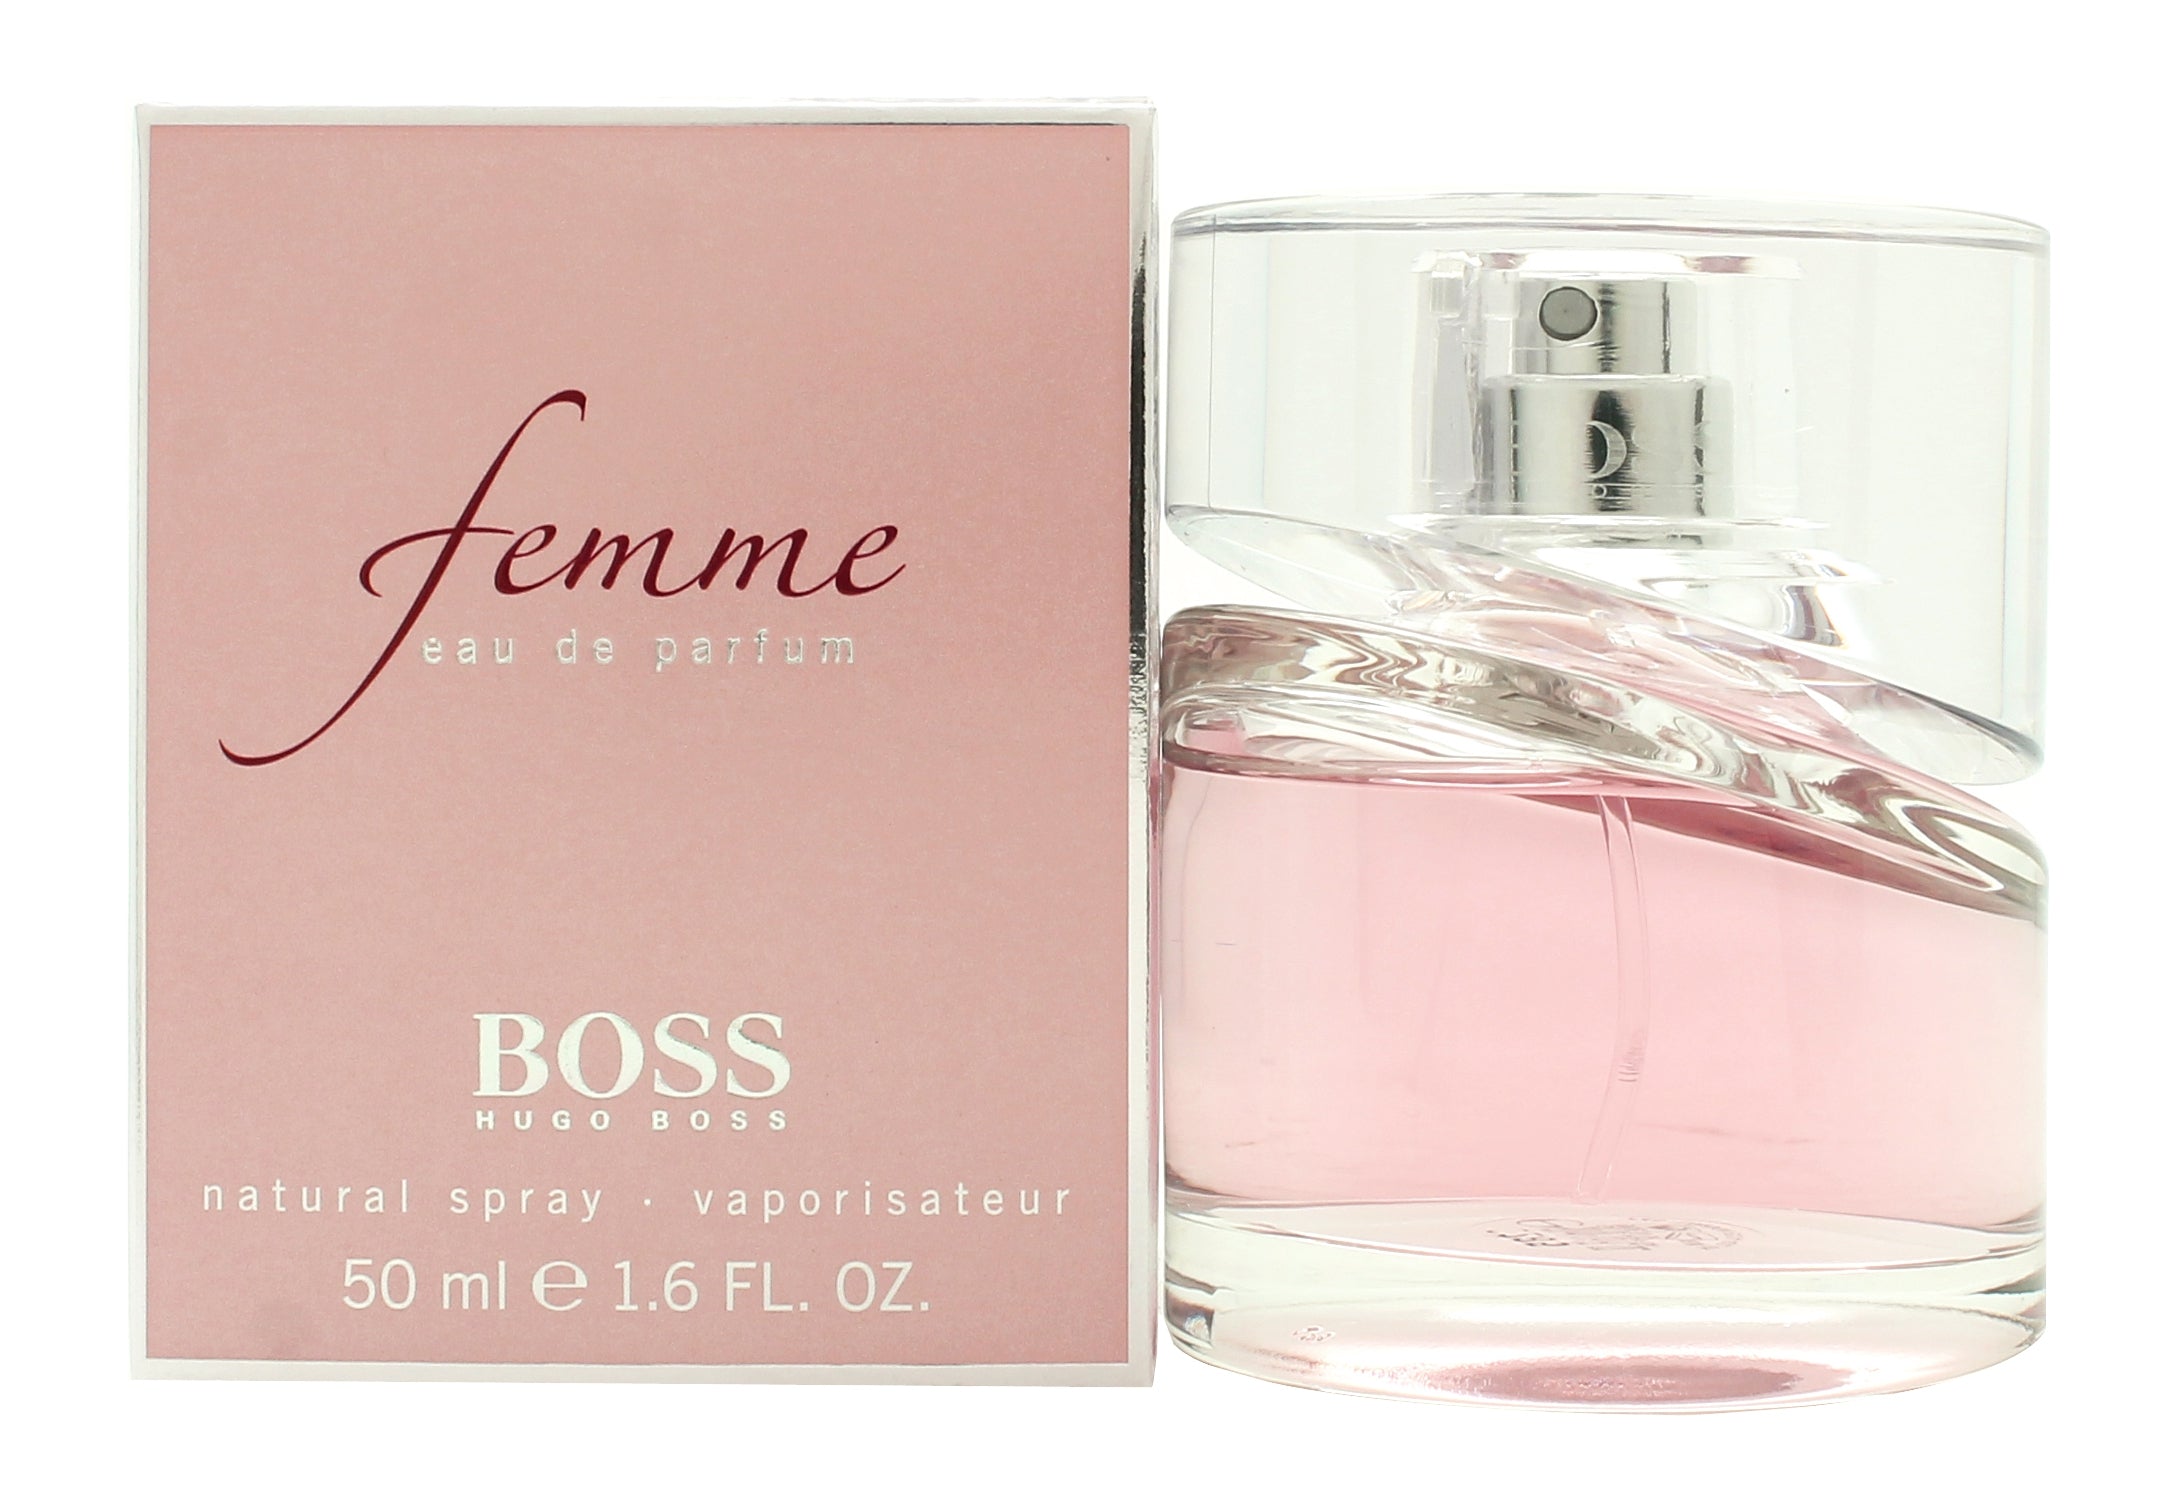 View Hugo Boss Femme Eau de Parfum 50ml Spray information